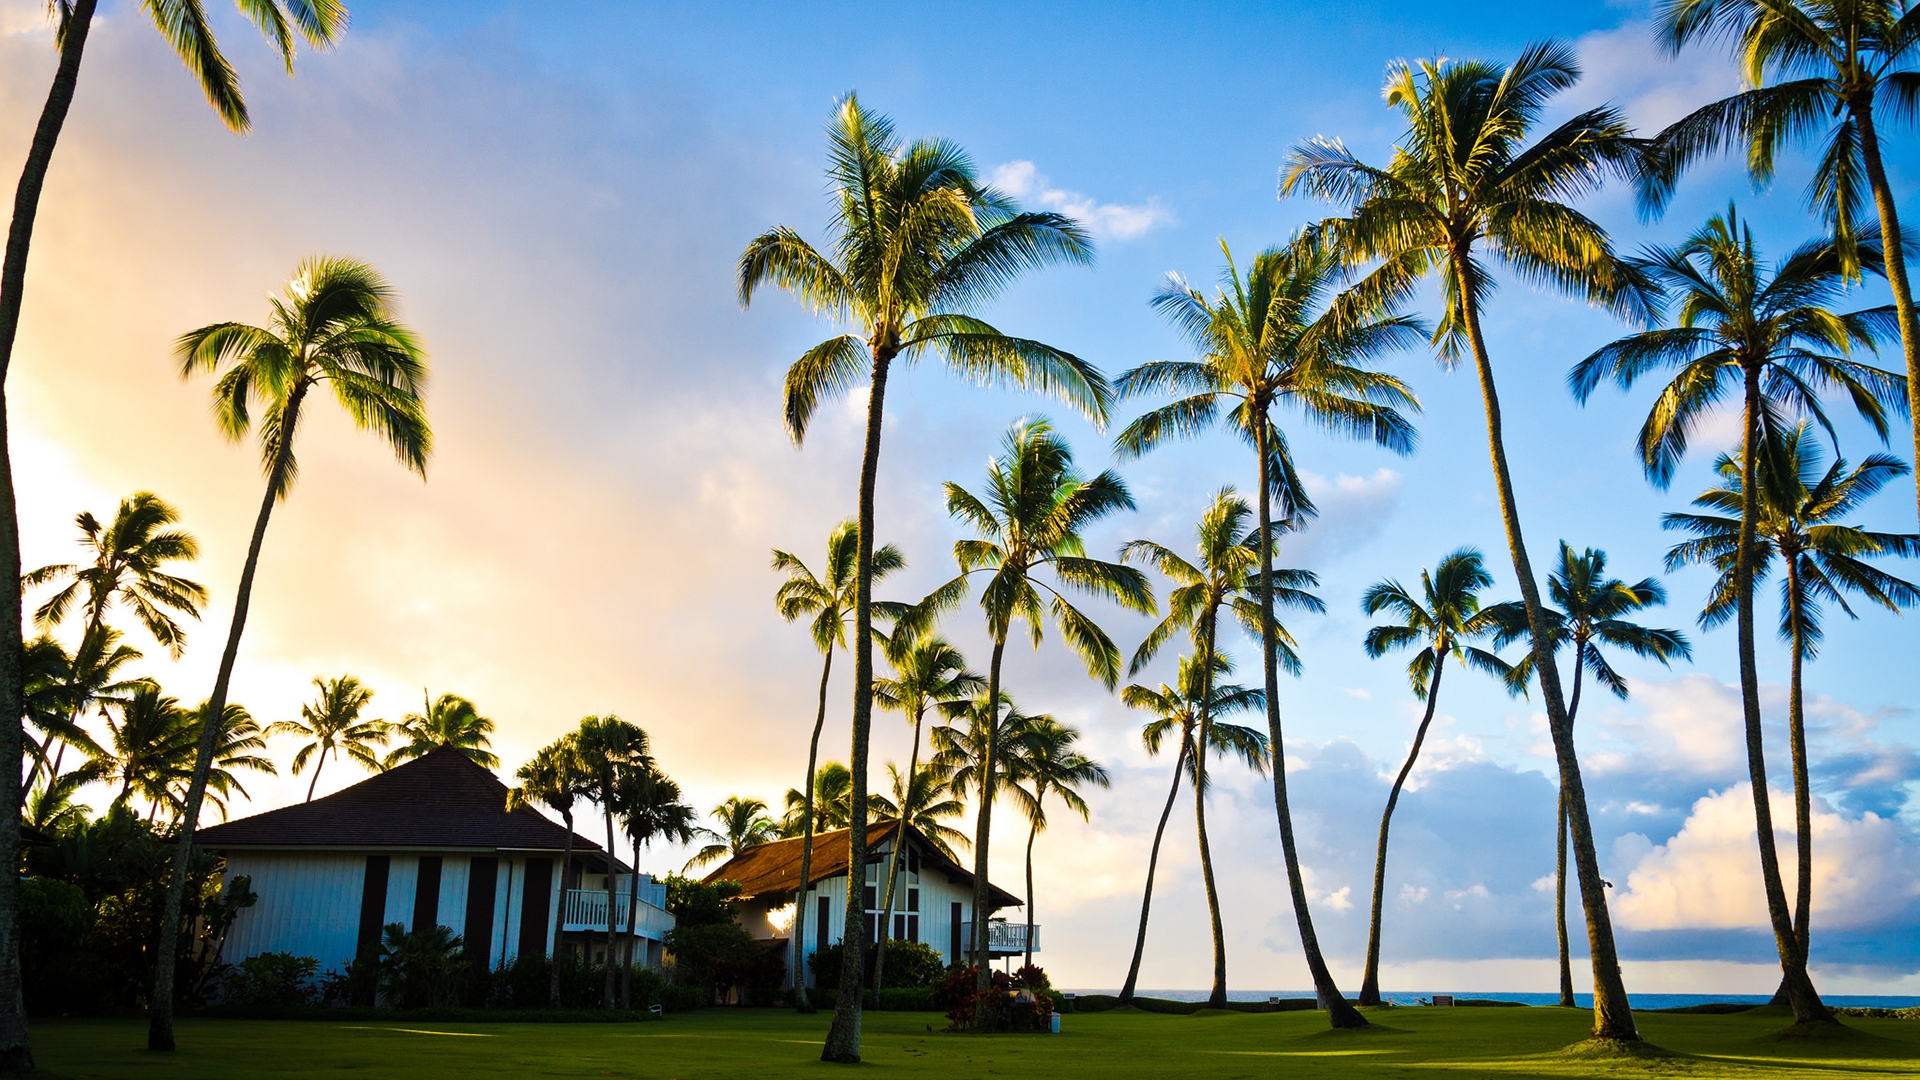 Hawaii Beach Houses for 1920 x 1080 HDTV 1080p resolution